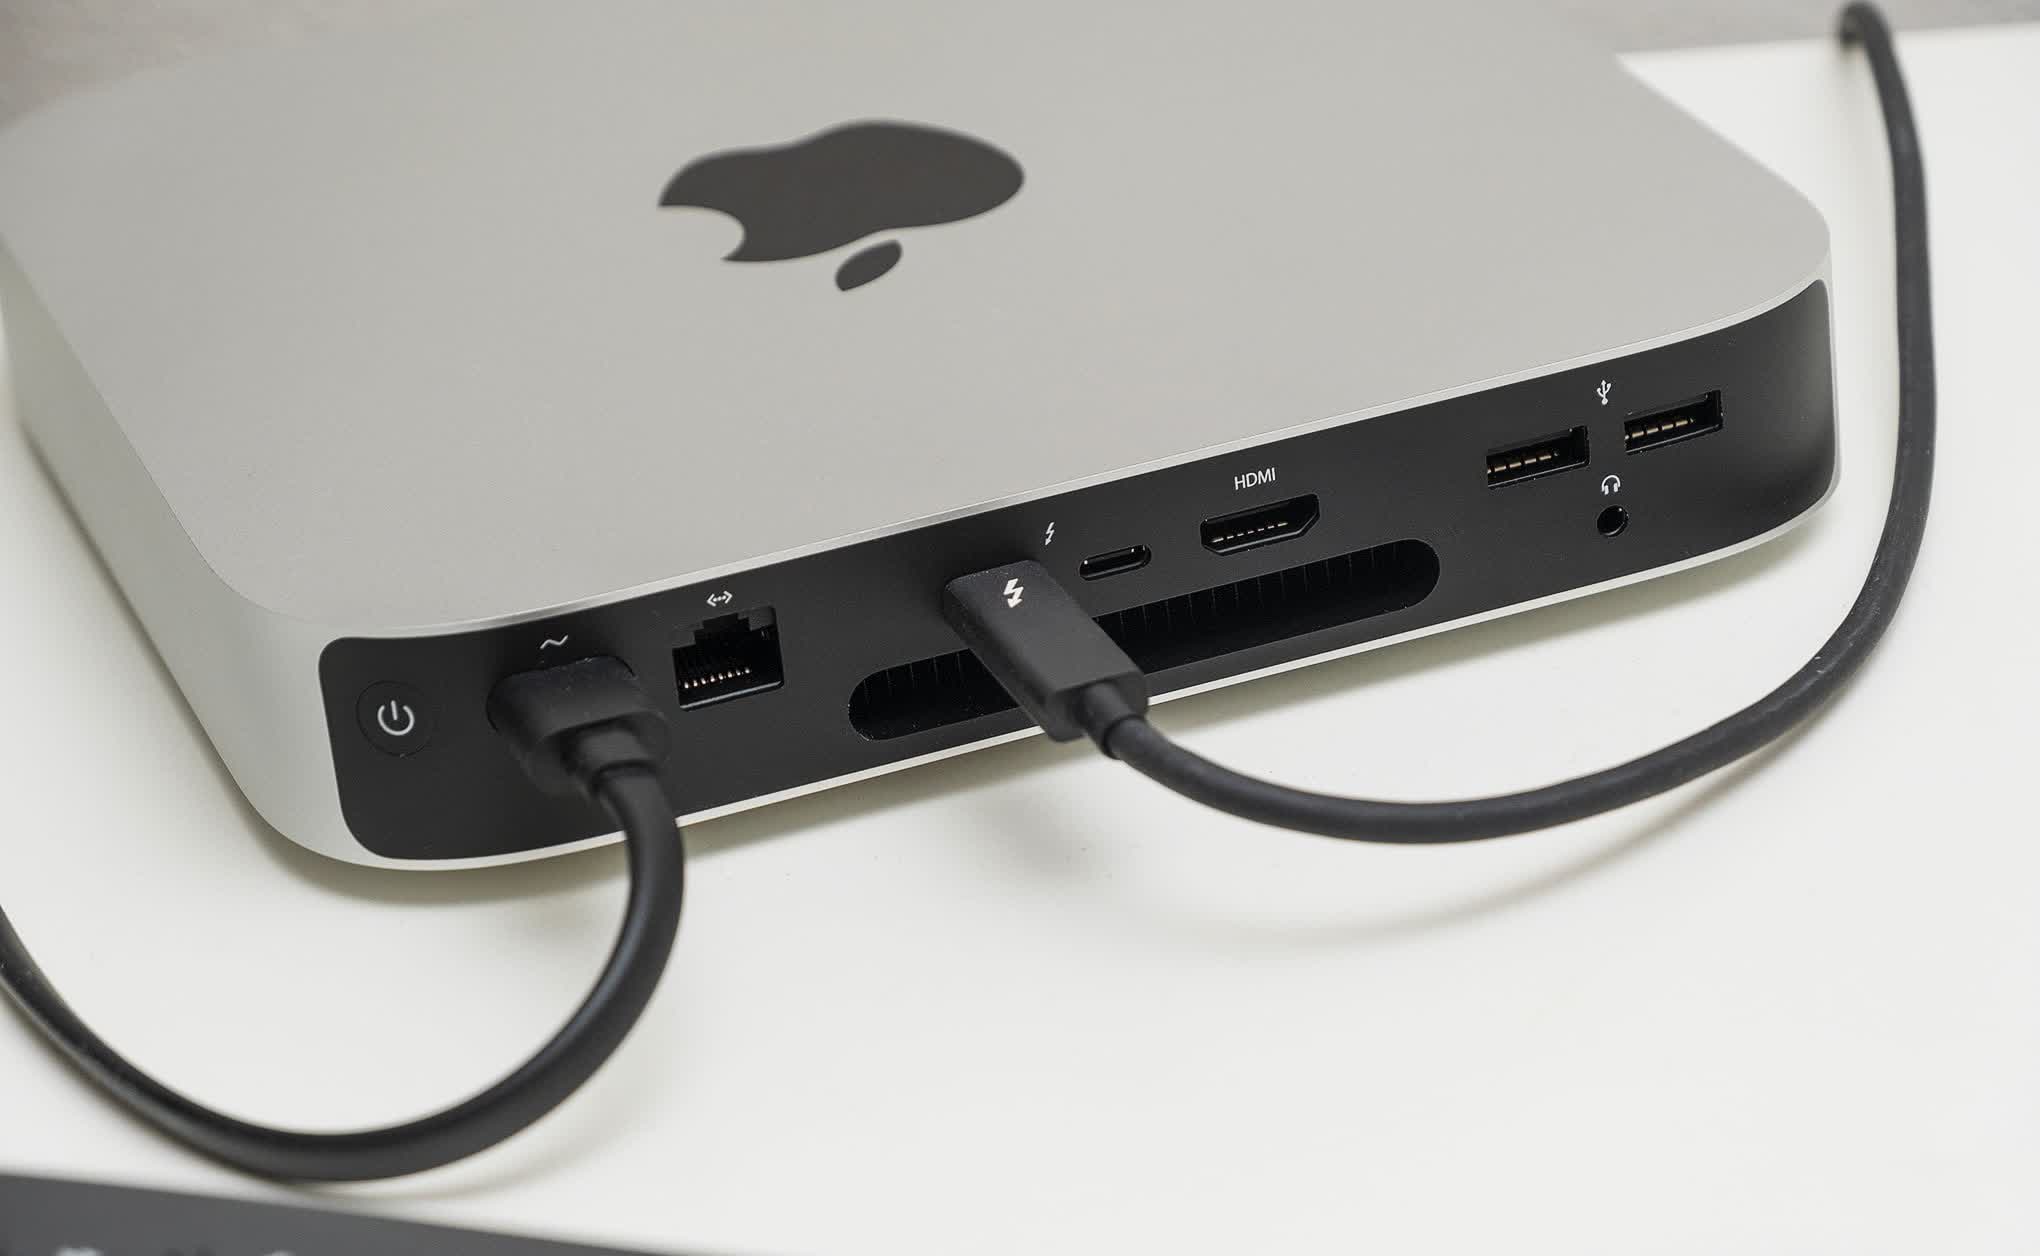 Apple Mac mini M1 power consumption is 3 times lower than Intel